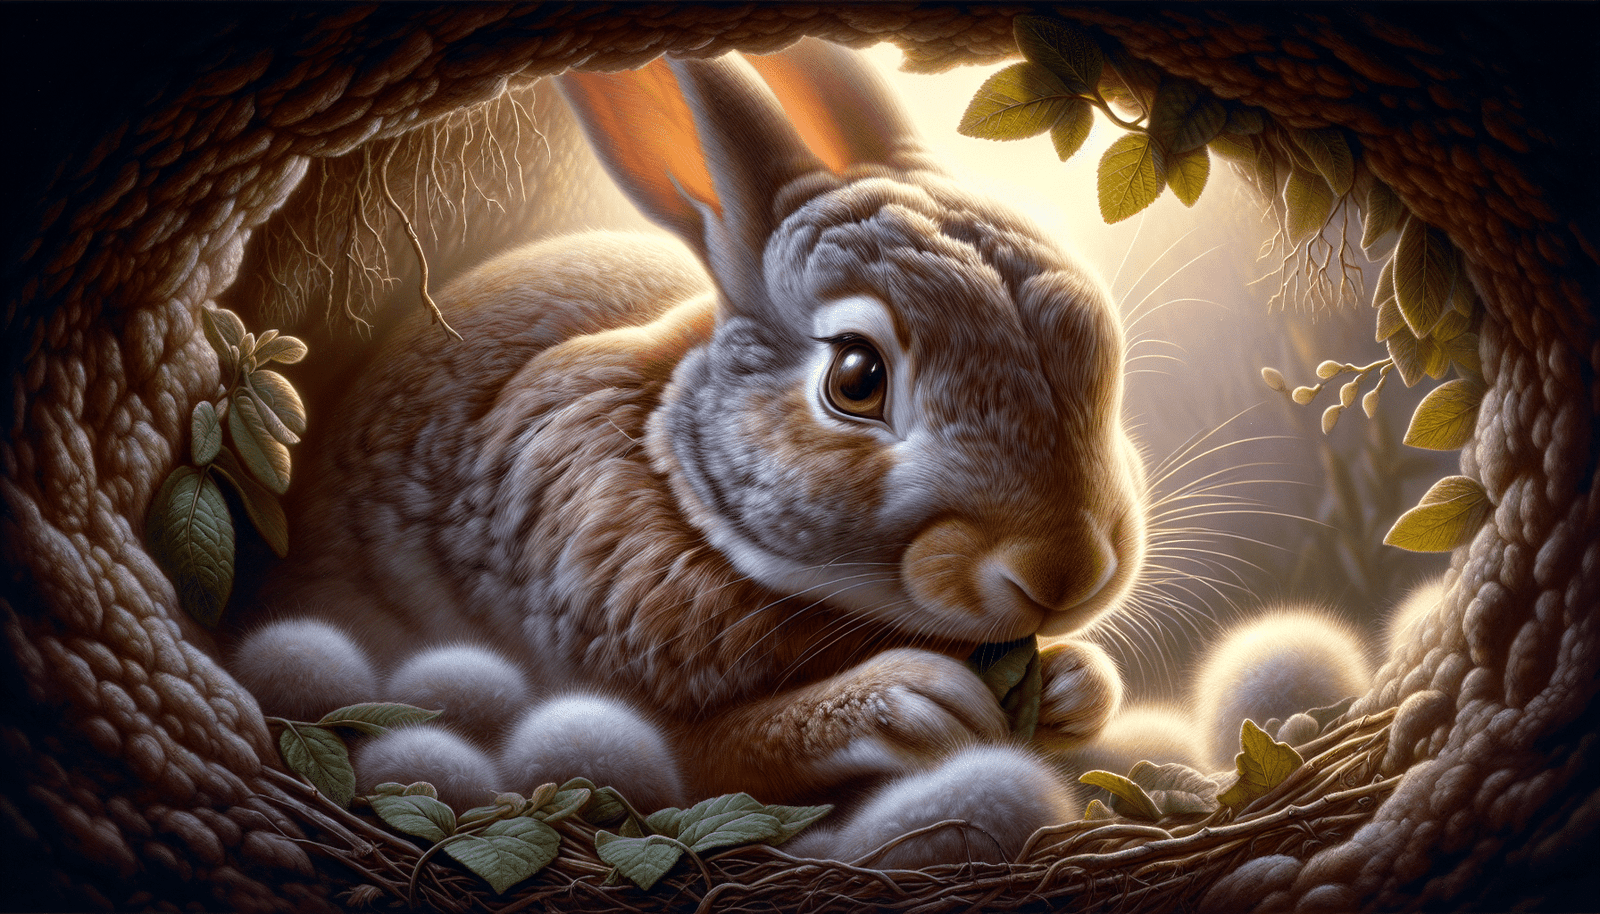 Artistic representation of a female rabbit's nesting habits